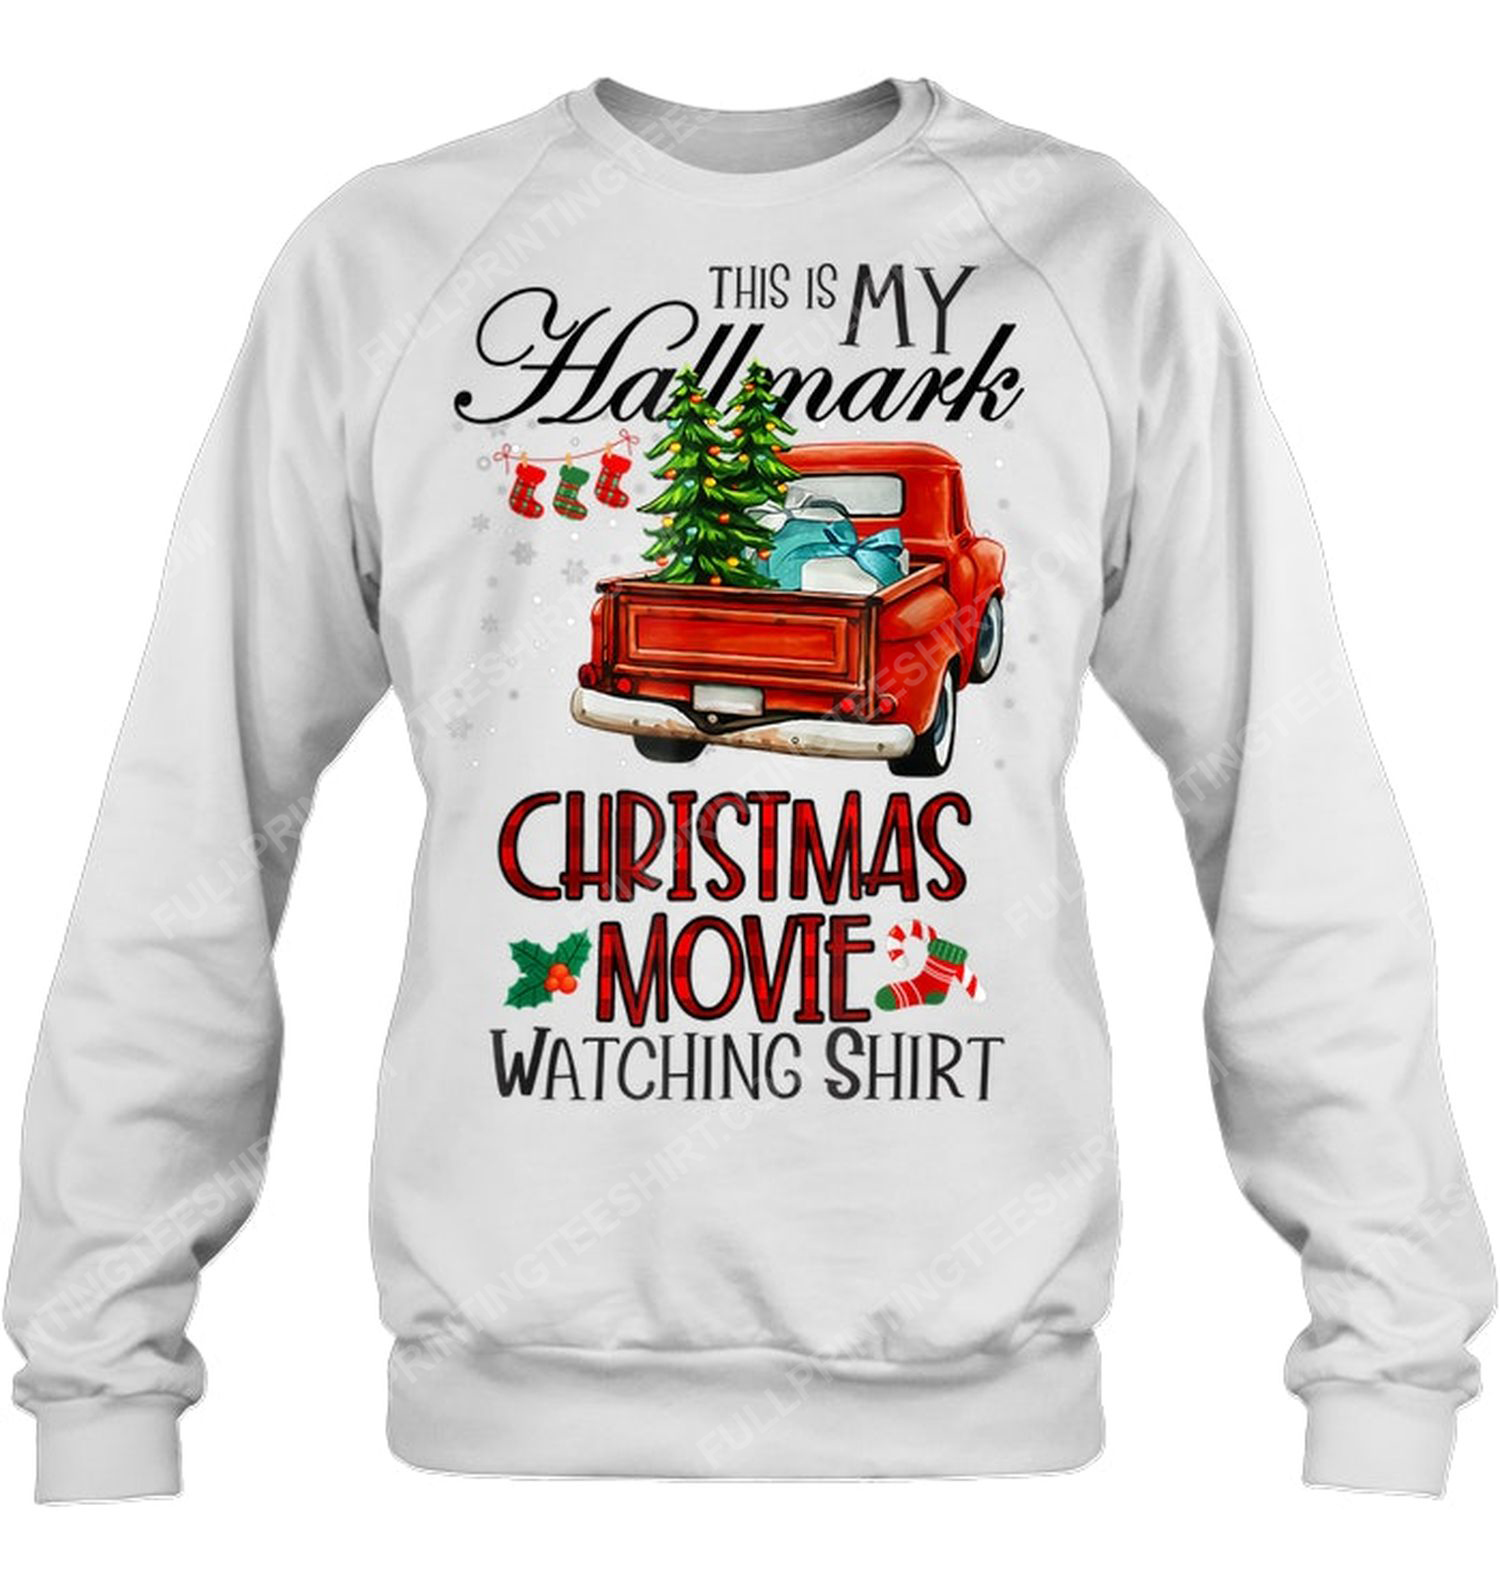 This is my hallmark christmas movie watching sweatshirt